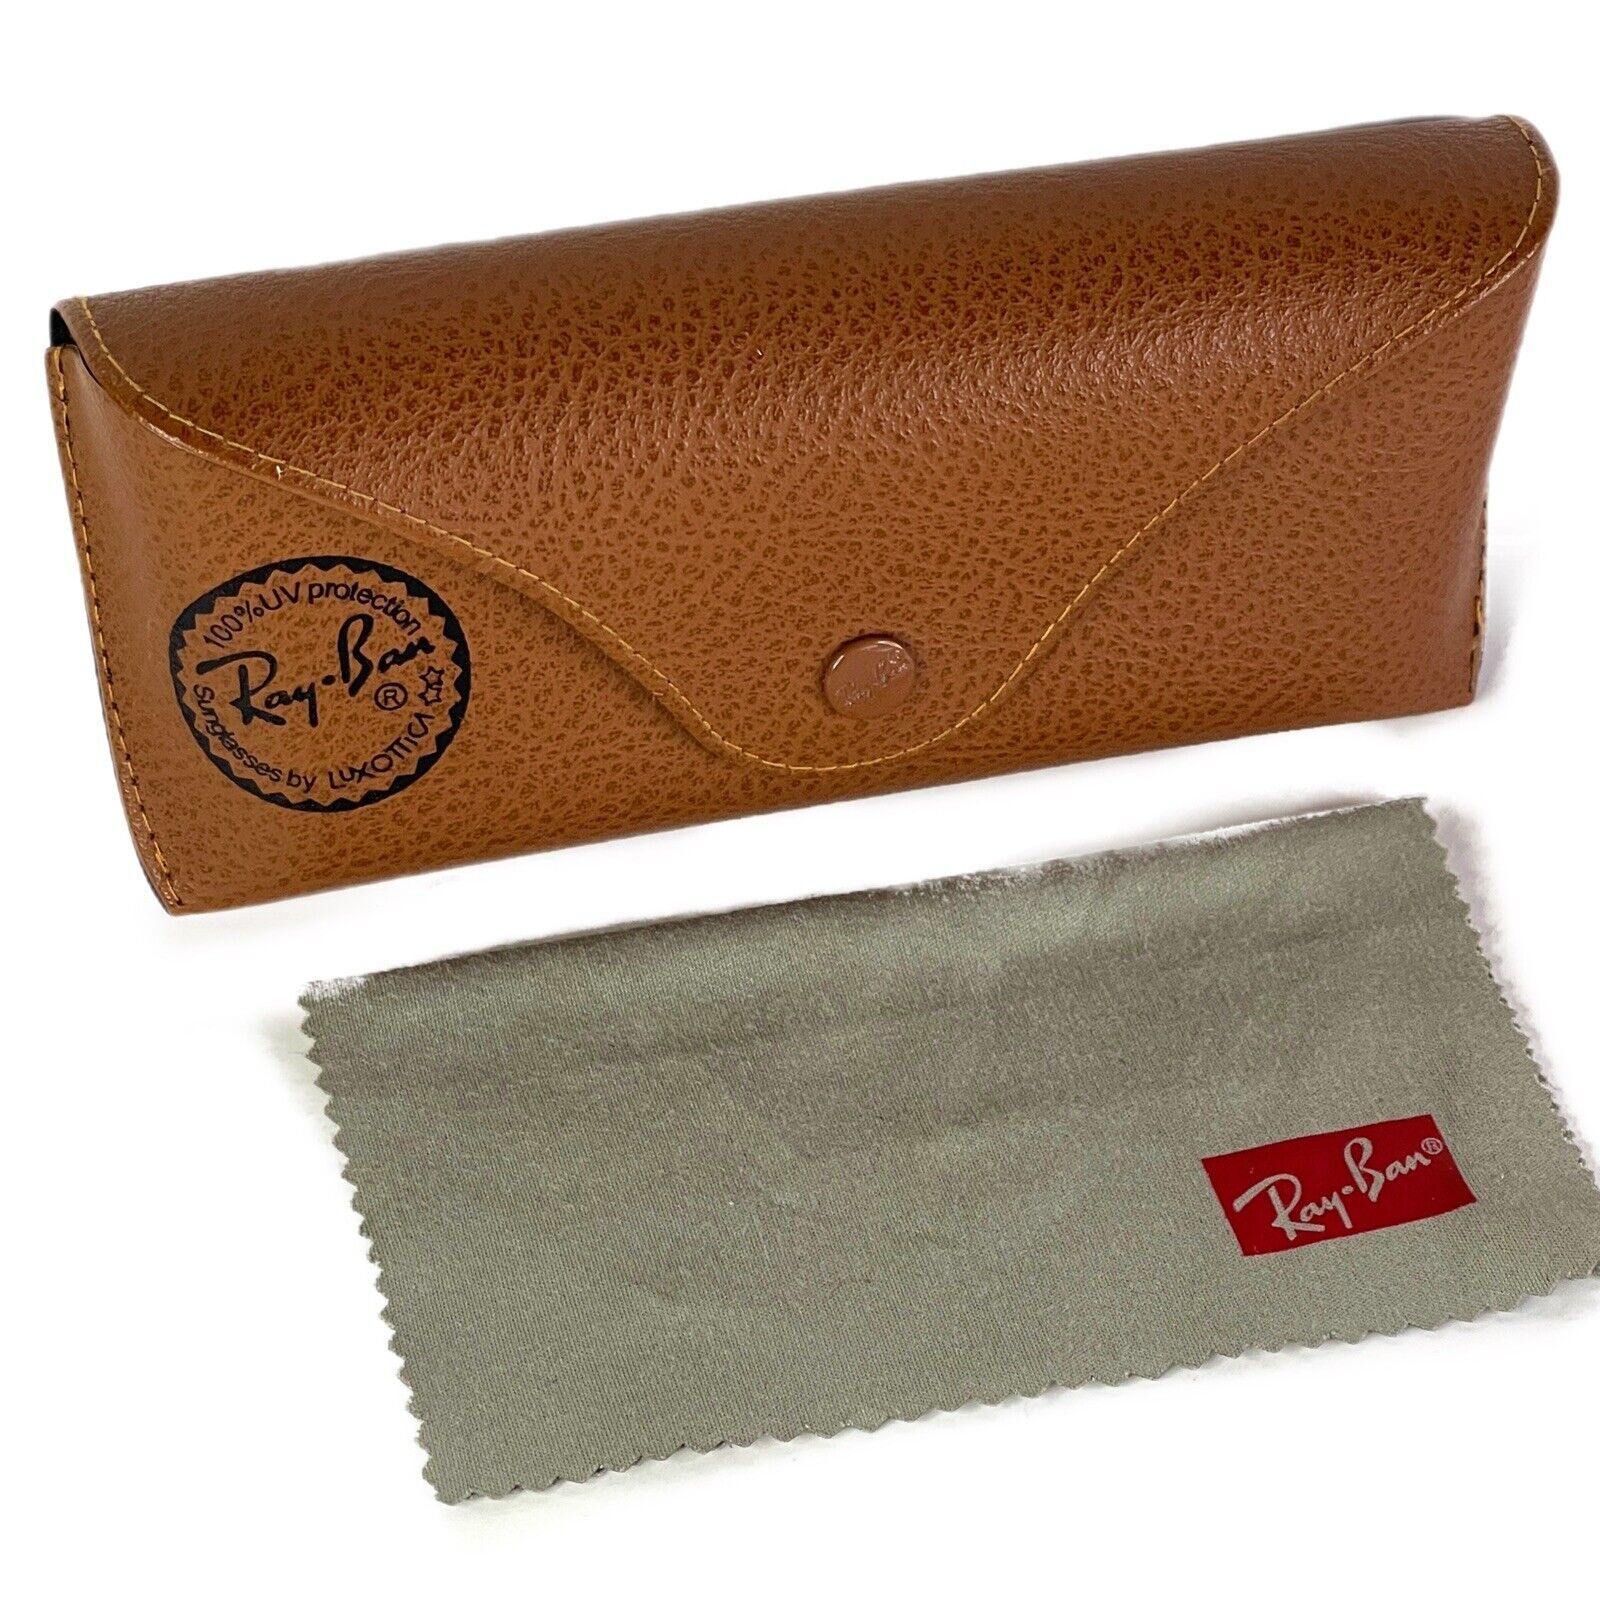 Ray Ban Brown Leather Soft Case w Cloth Black Logo - $11.28